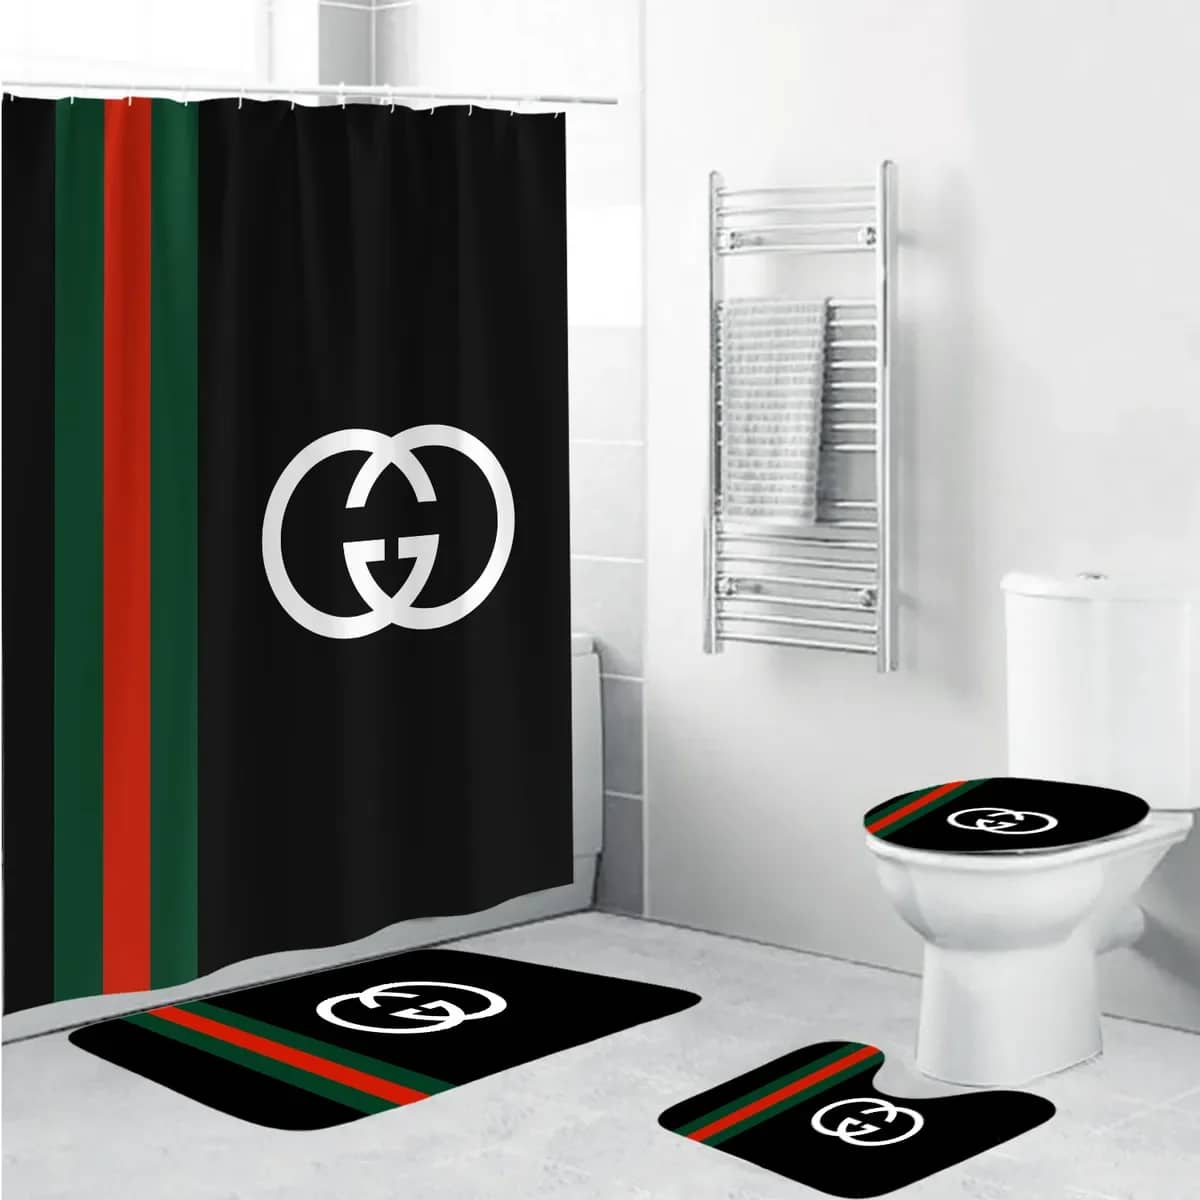 Gucci Black Luxury Brand Premium Bathroom Sets